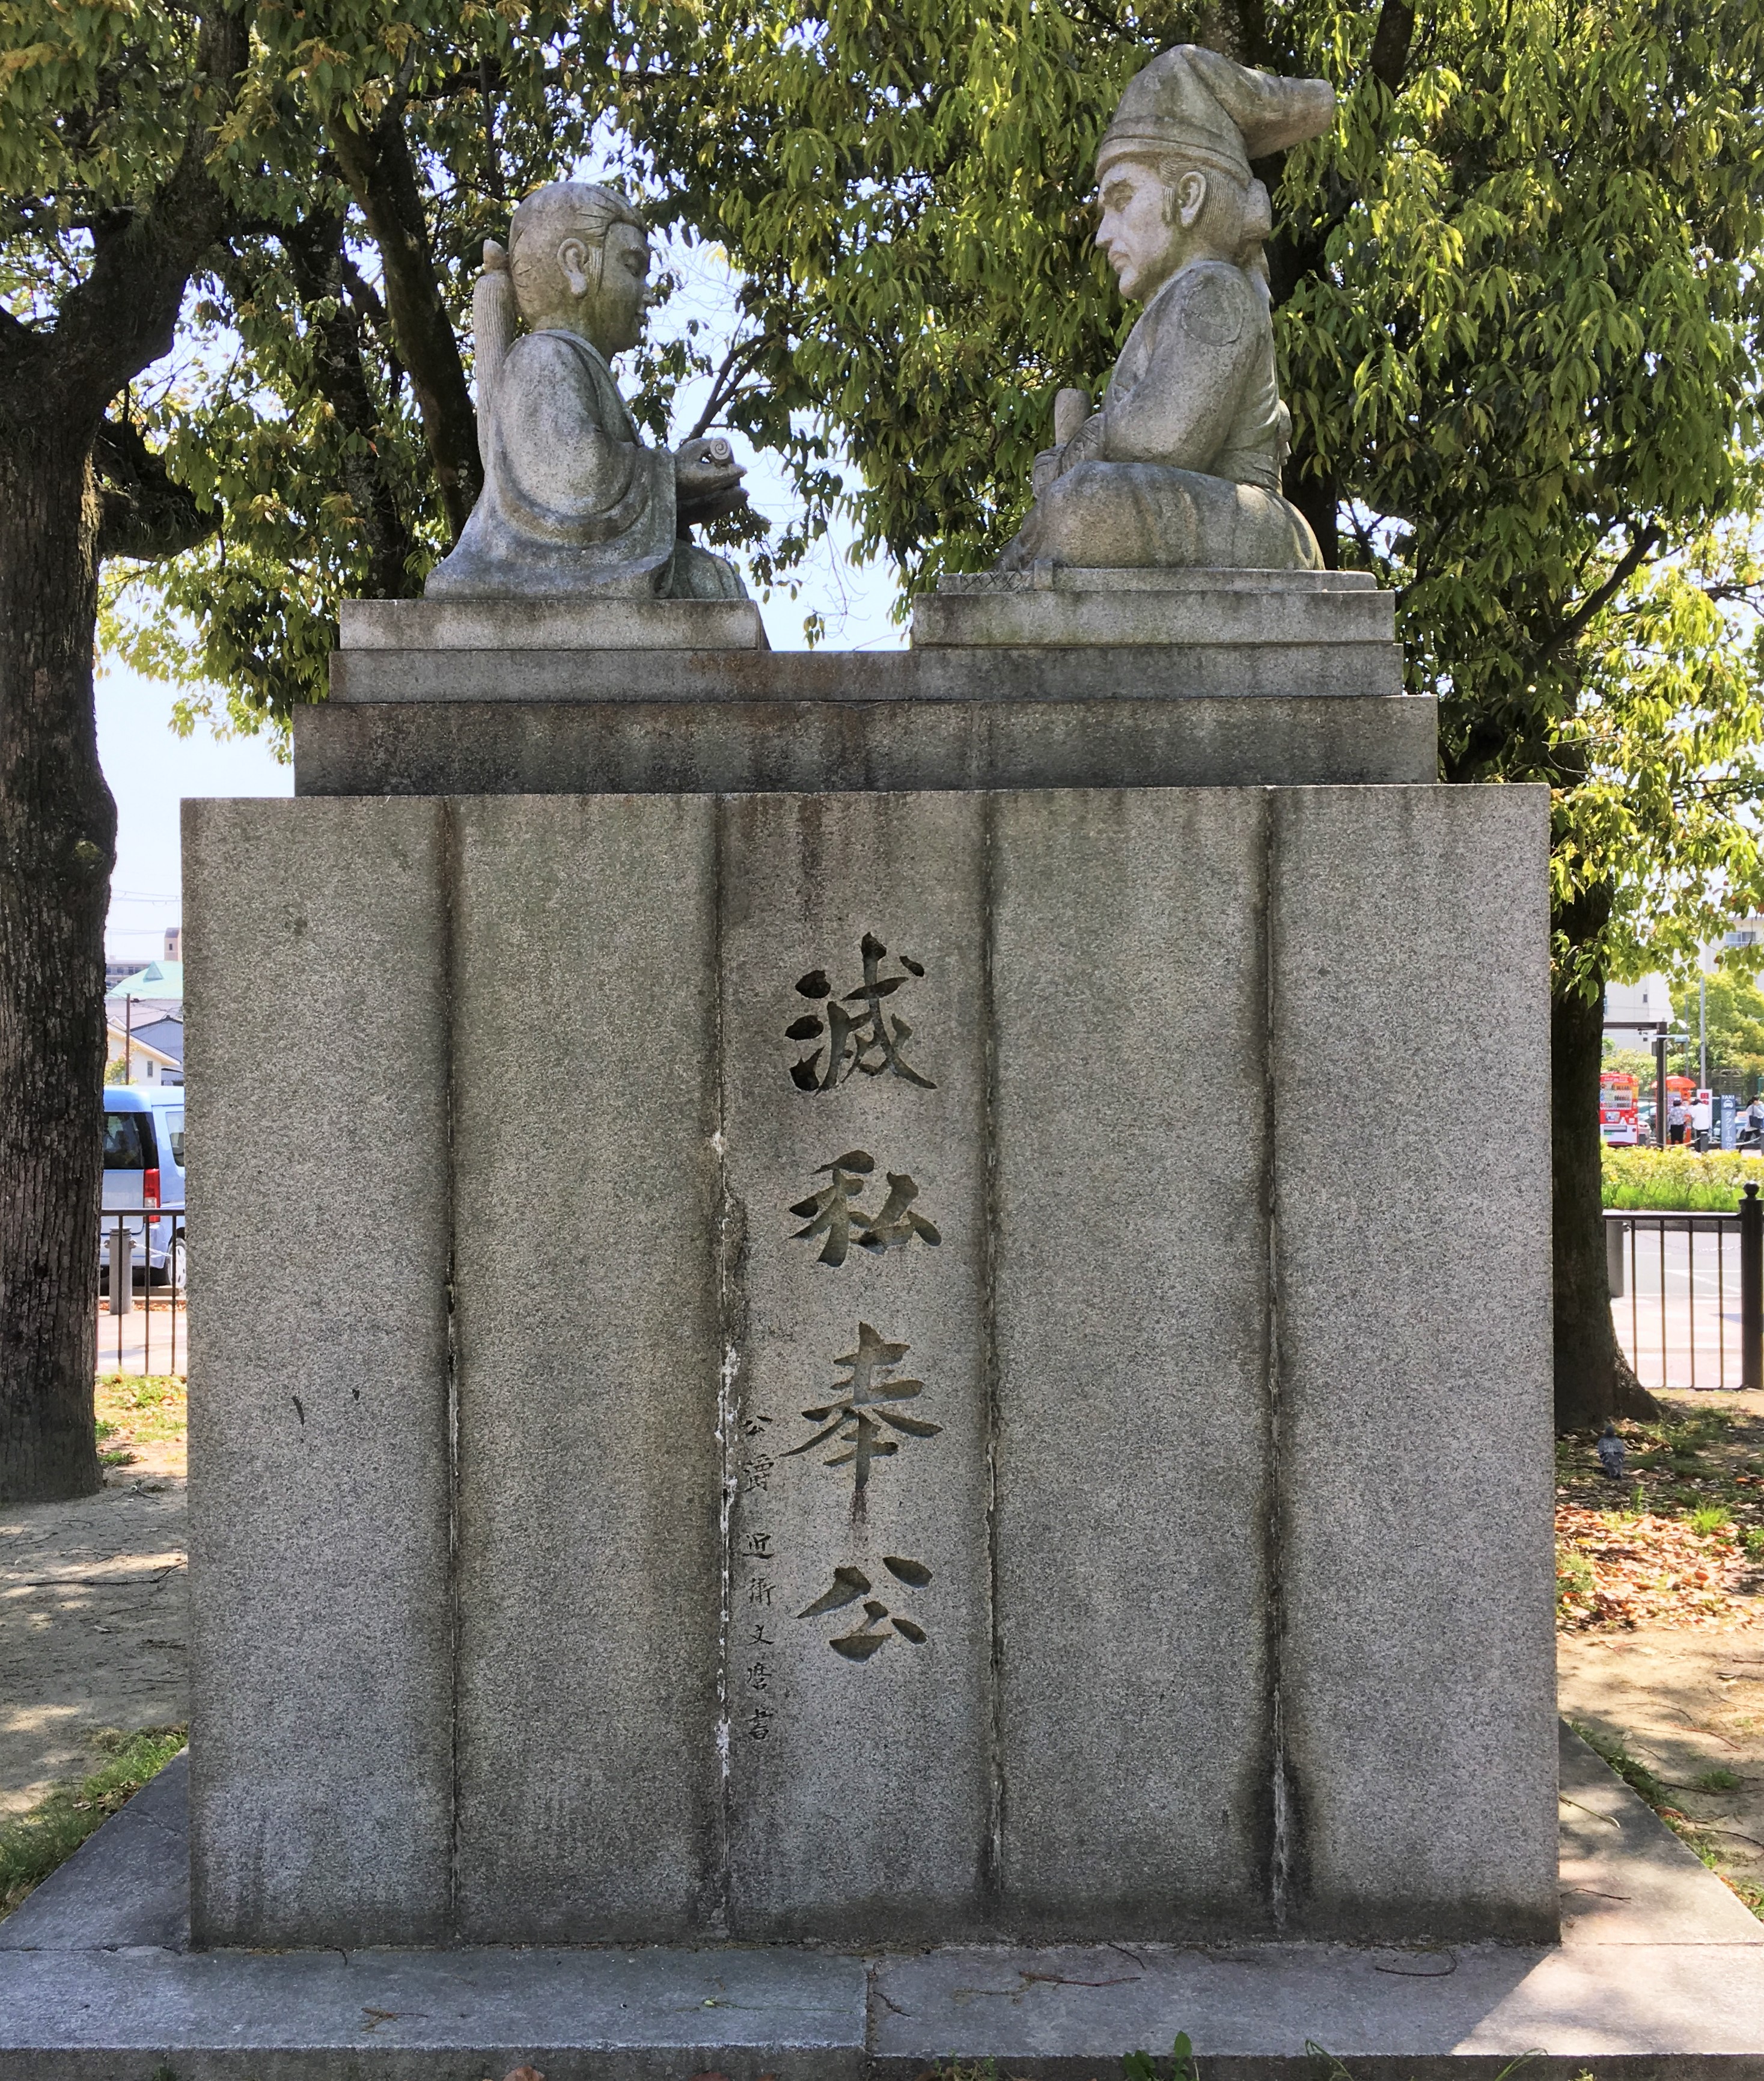 statue of kusunoki masashige and his son in sakurai Japan